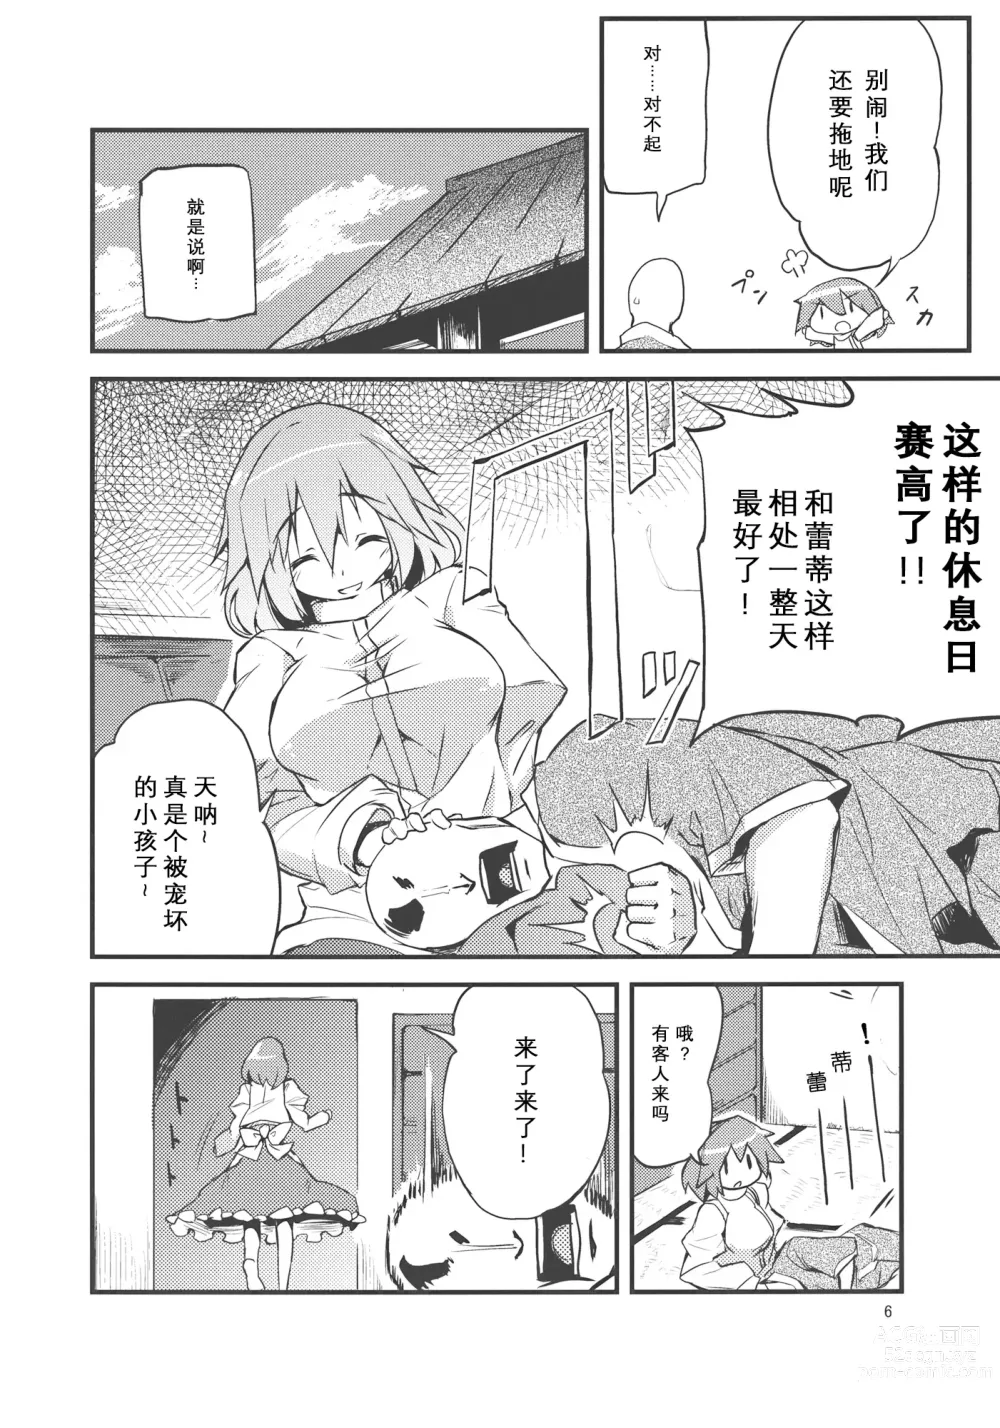 Page 6 of doujinshi ×蕾蒂